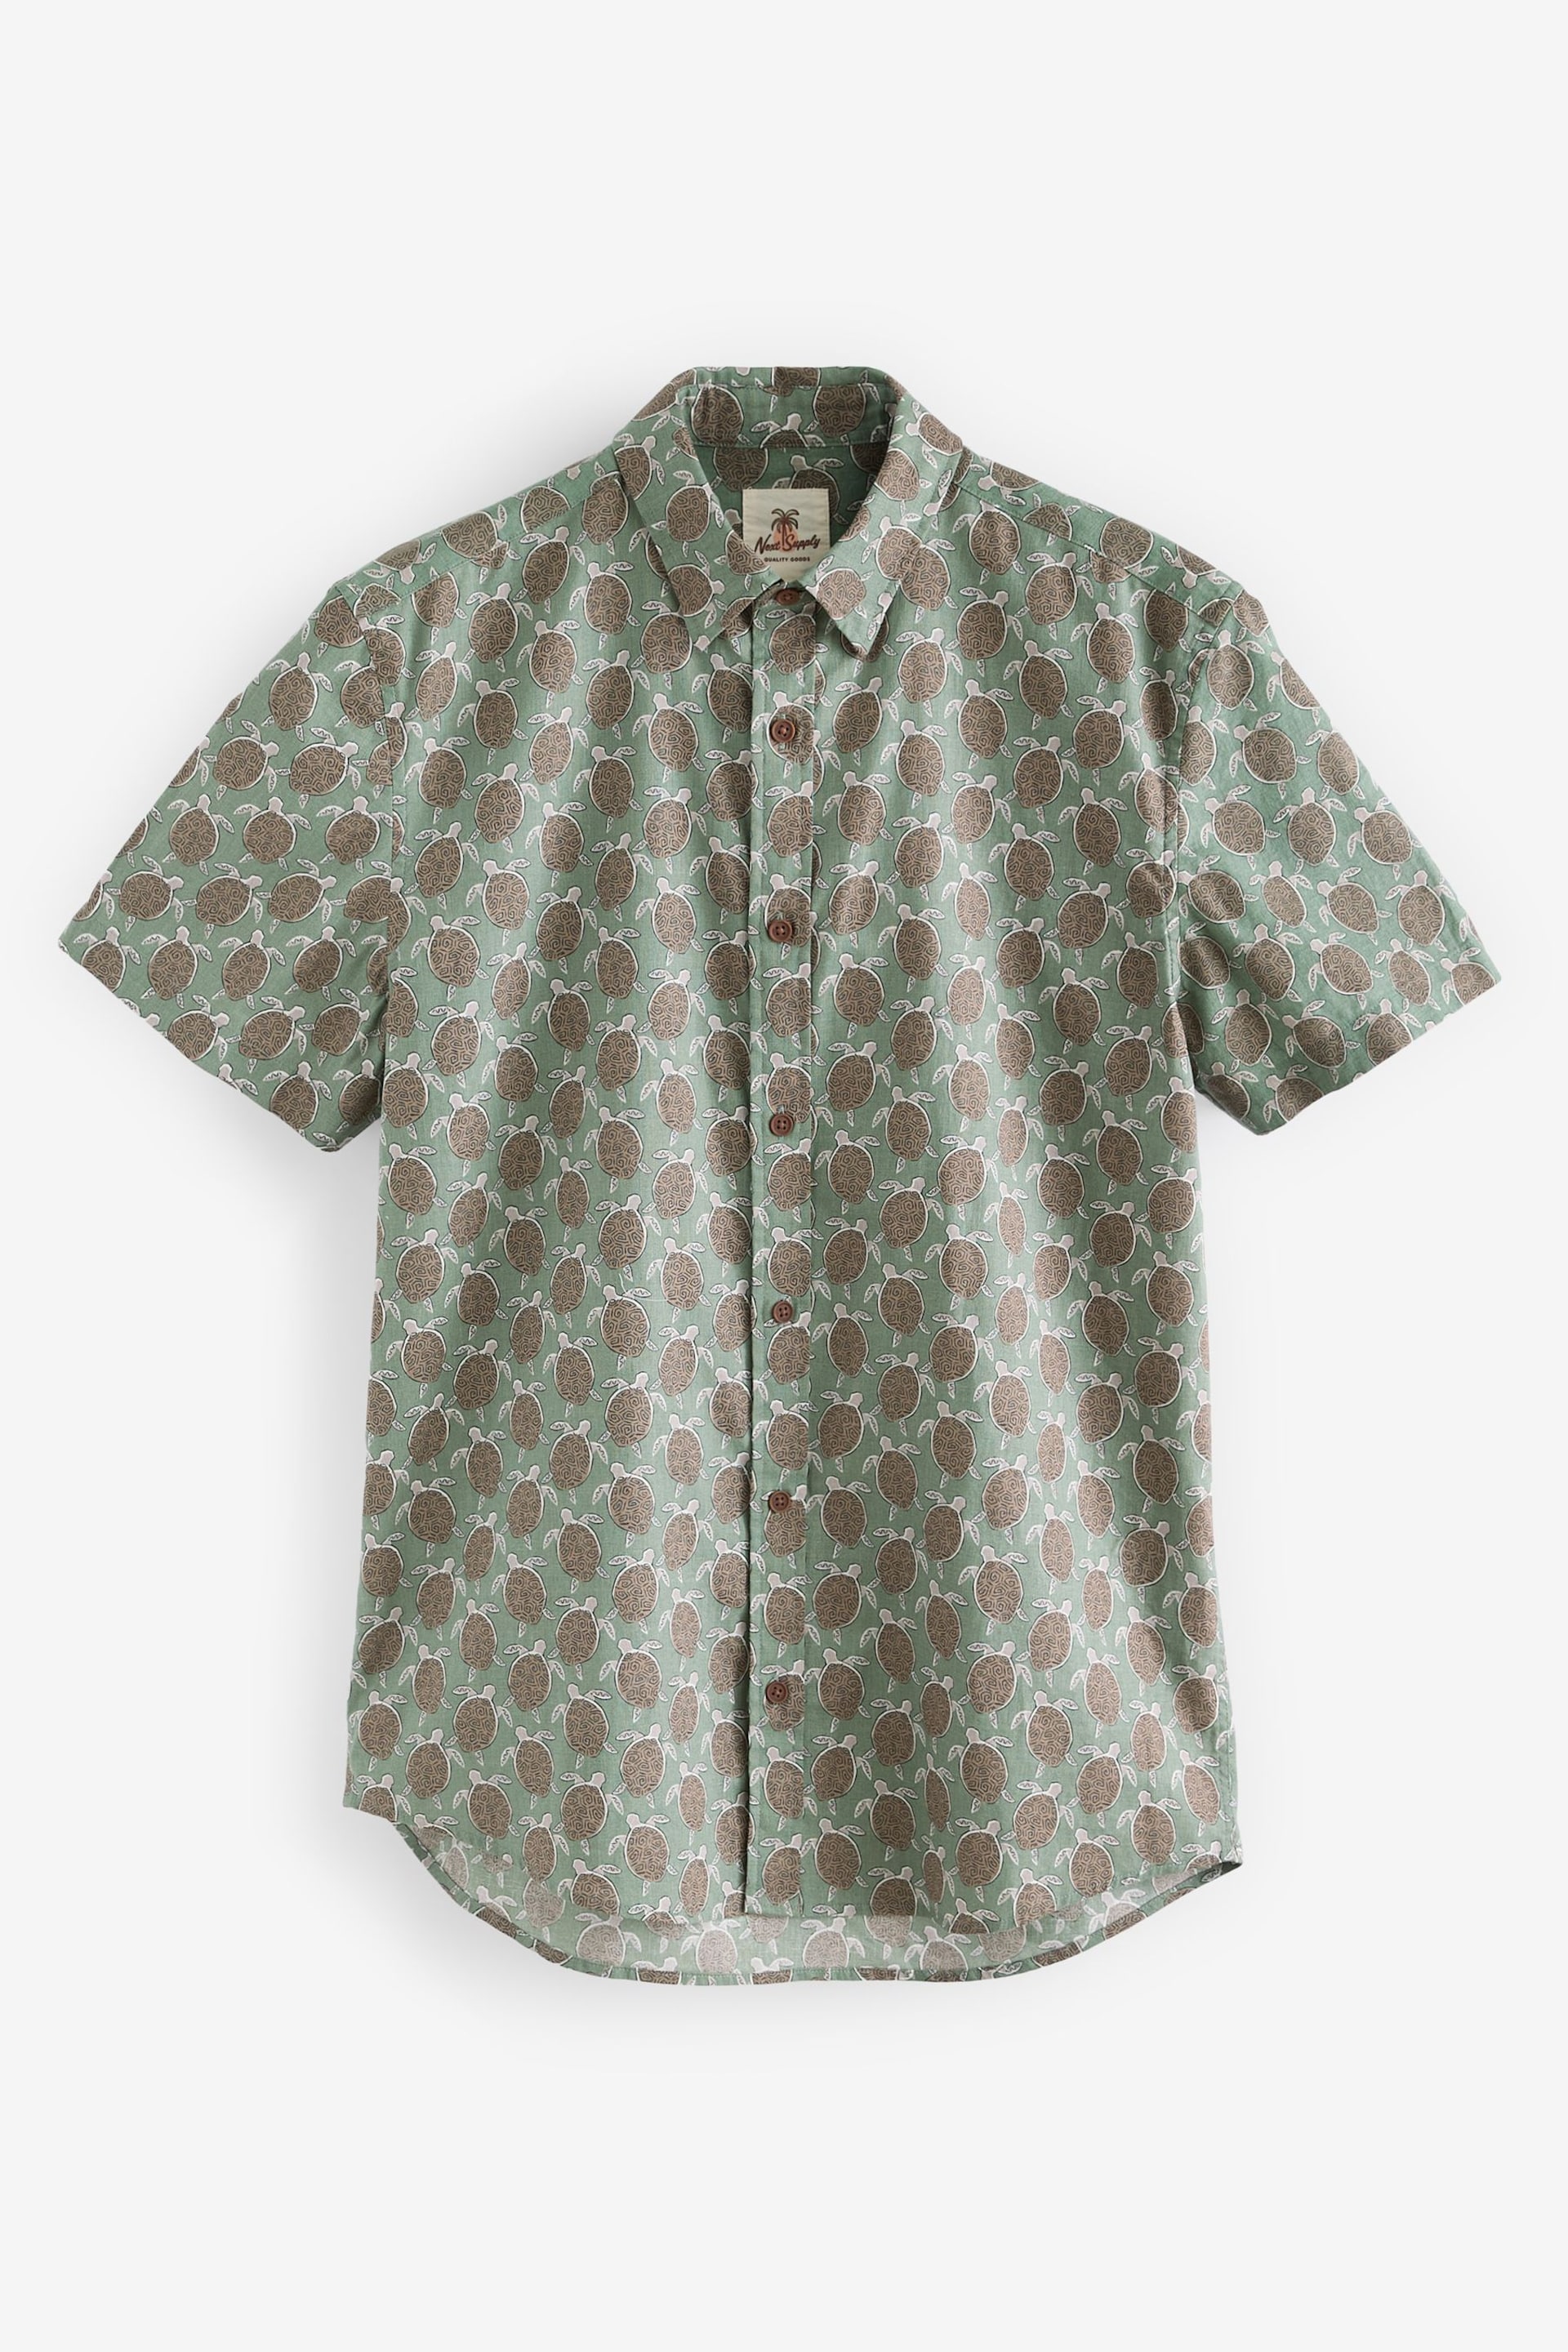 Green Linen Blend Printed Short Sleeve Shirt - Image 5 of 7